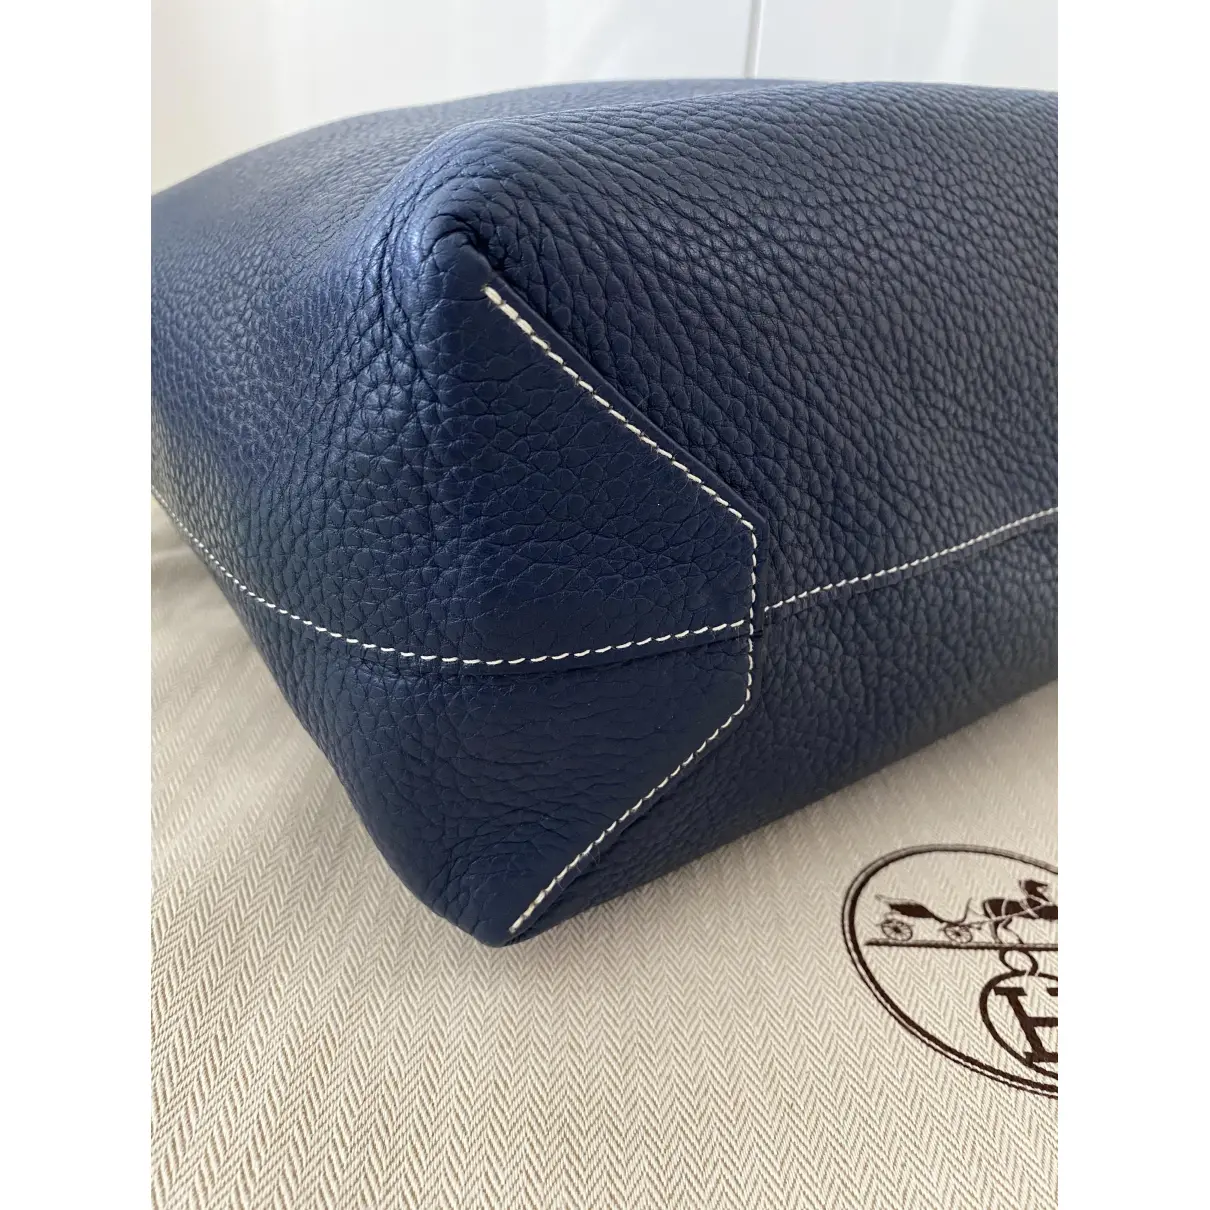 Buy Hermès Double sens leather handbag online